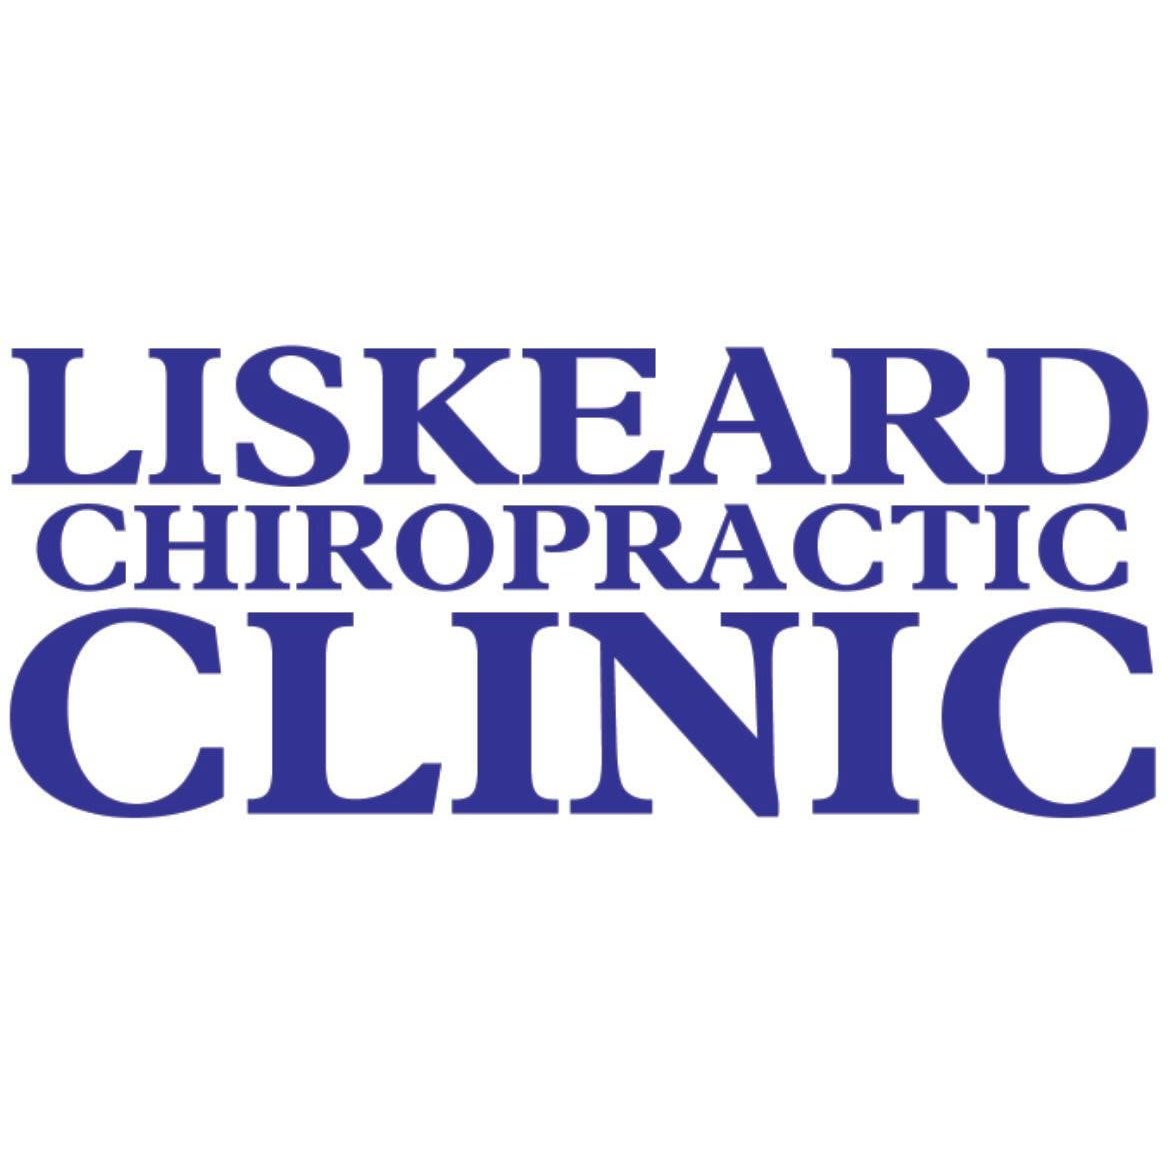 Liskeard Chiropractic Clinic - Liskeard, Cornwall PL14 4AA - 01579 340654 | ShowMeLocal.com